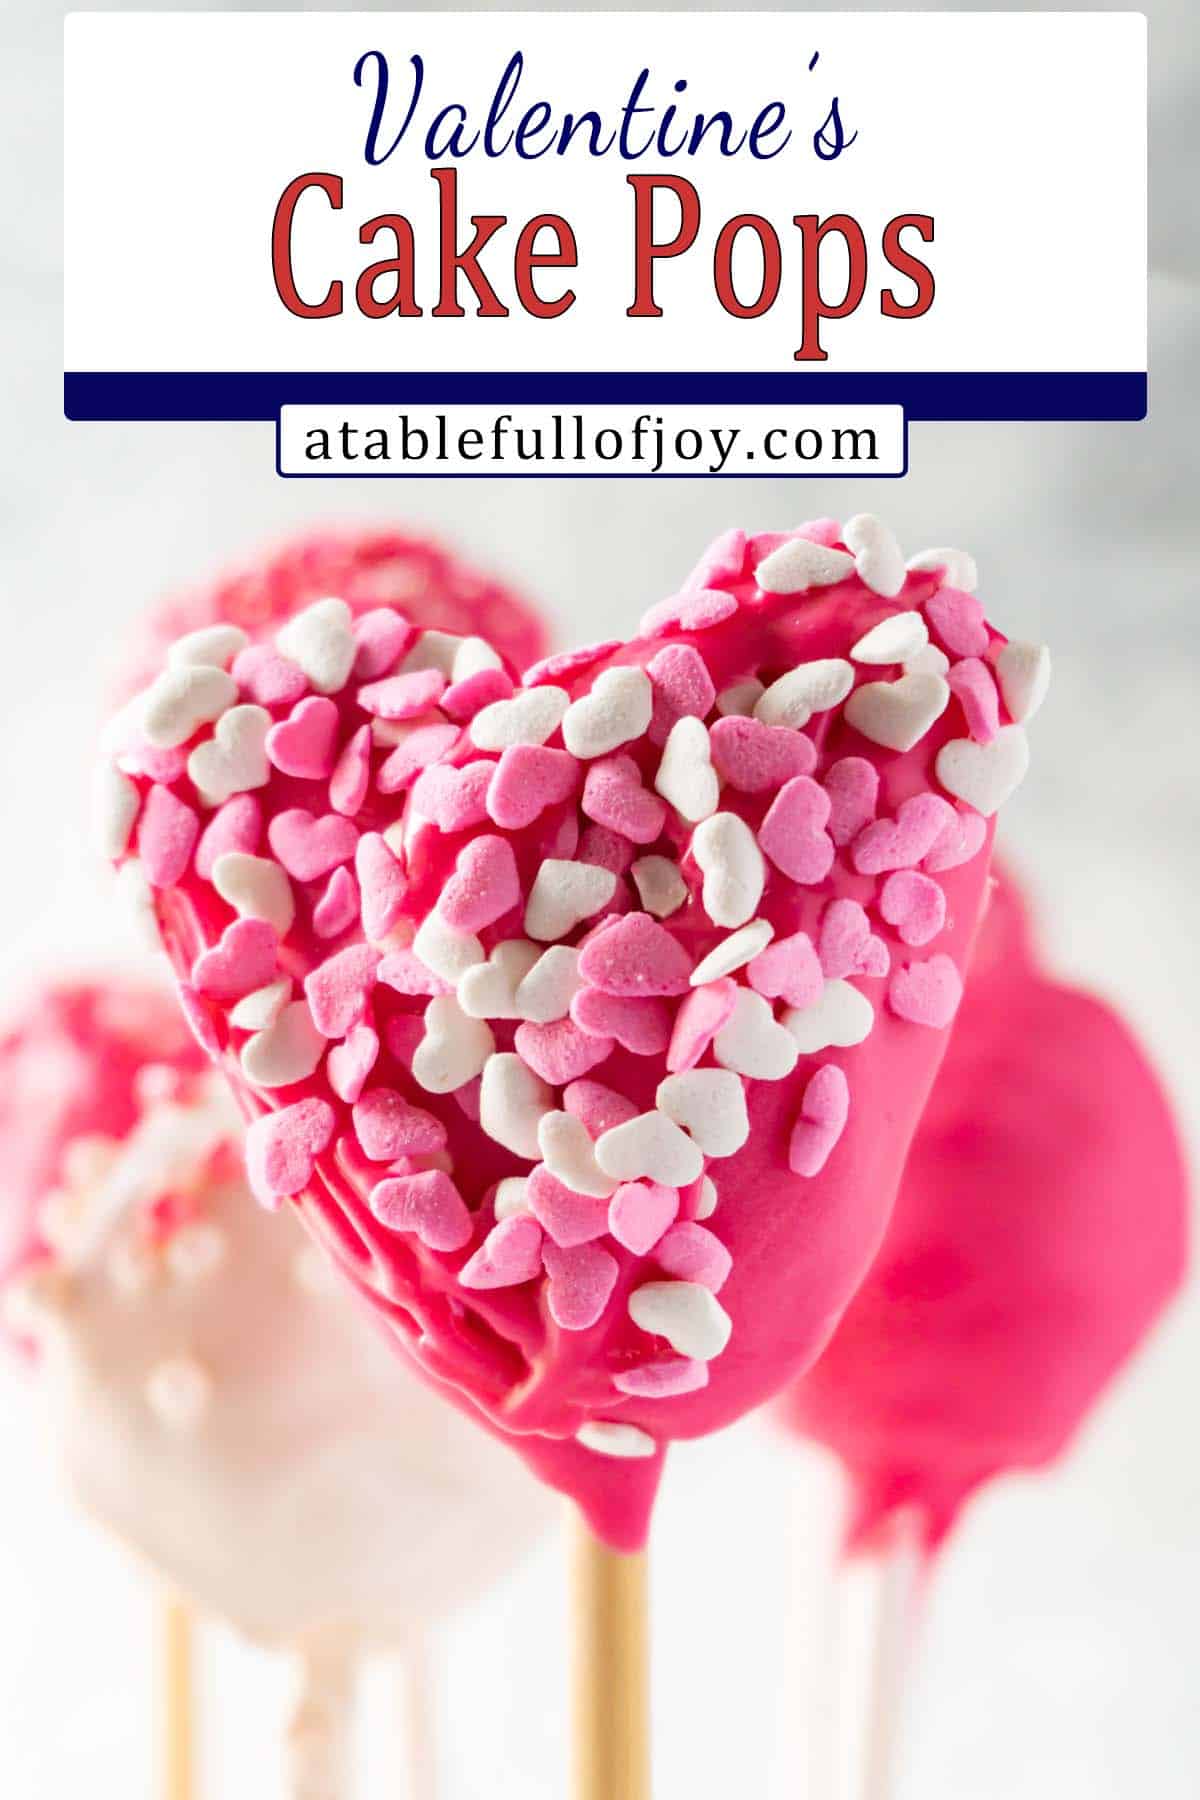 valentine cake pop heart pinterest image